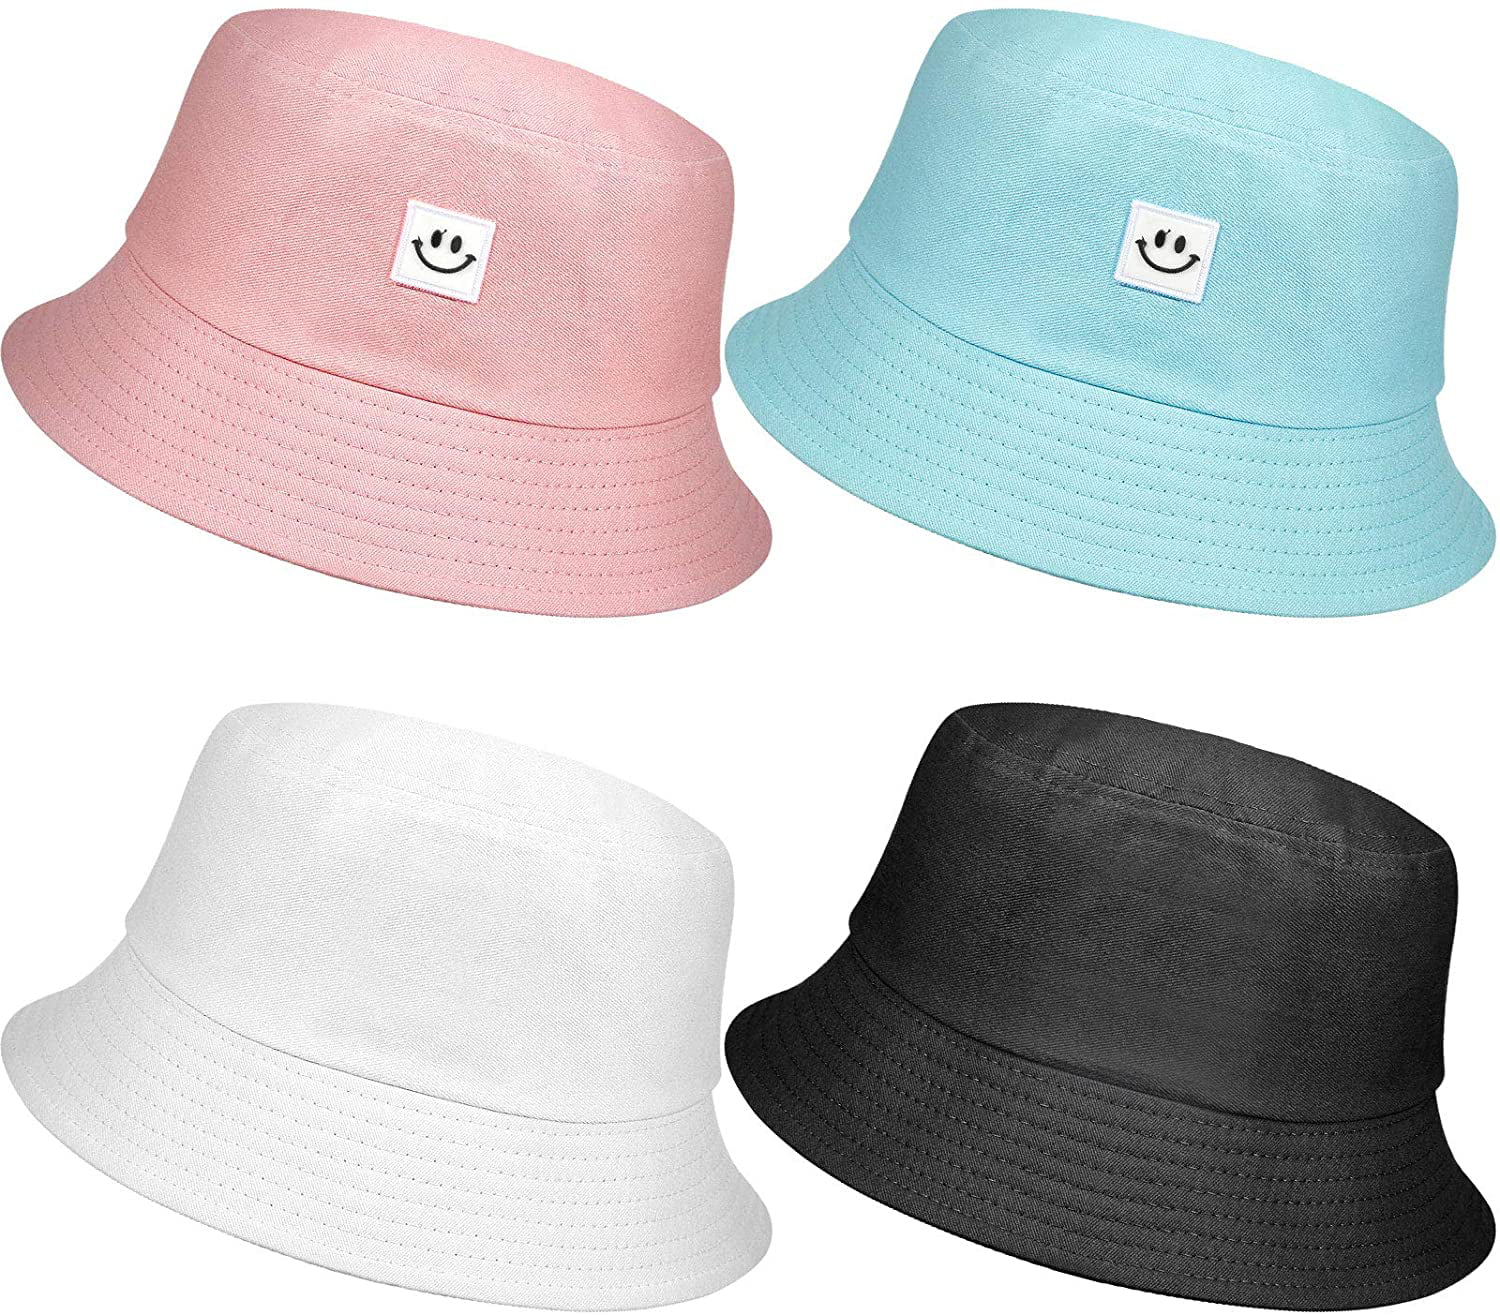 2 Pieces Kids Smile Face Bucket Hats Summer Travel Bucket Beach Sun Hats 